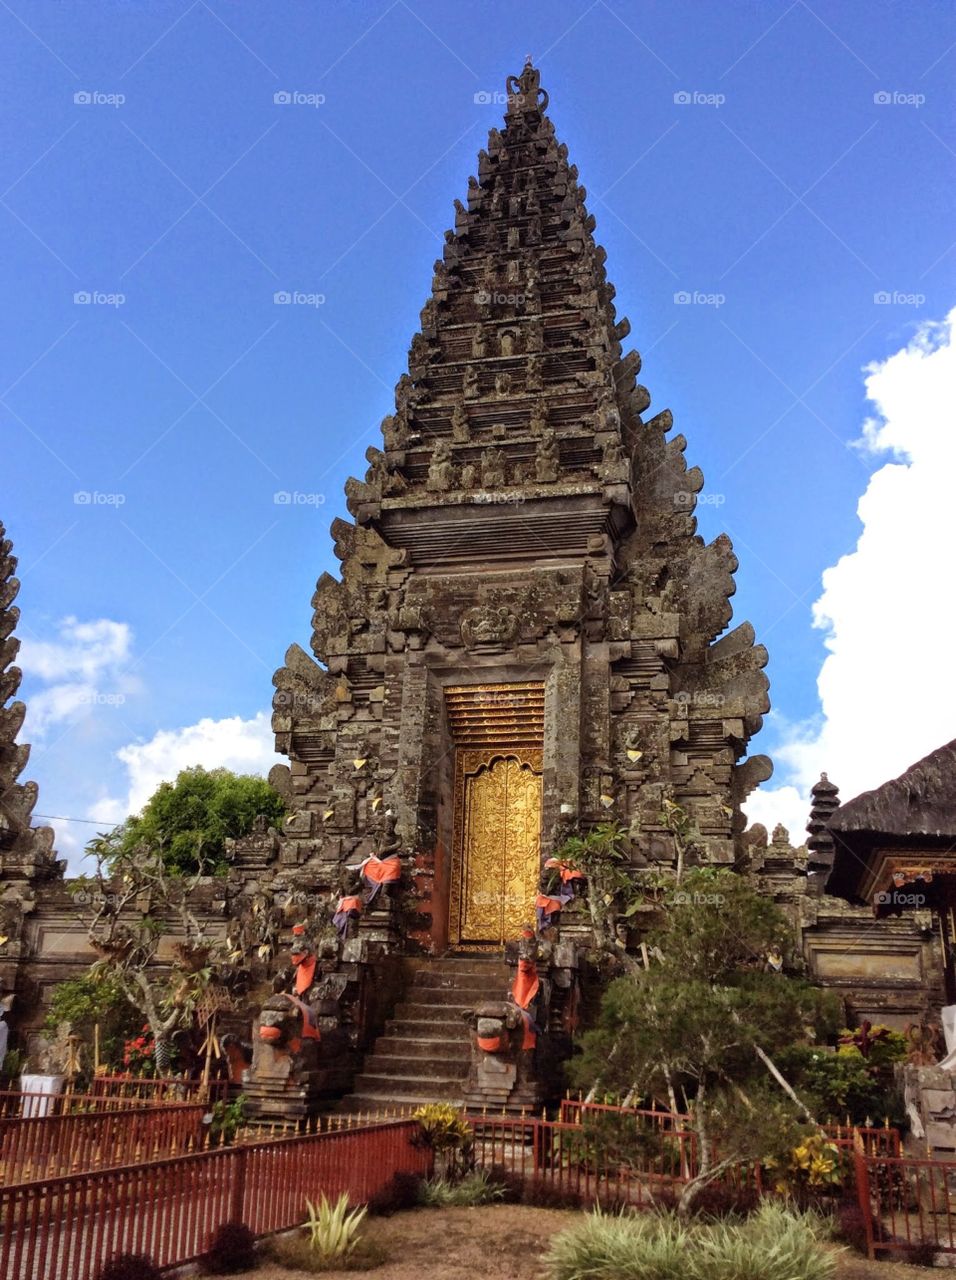 Temples / Bali